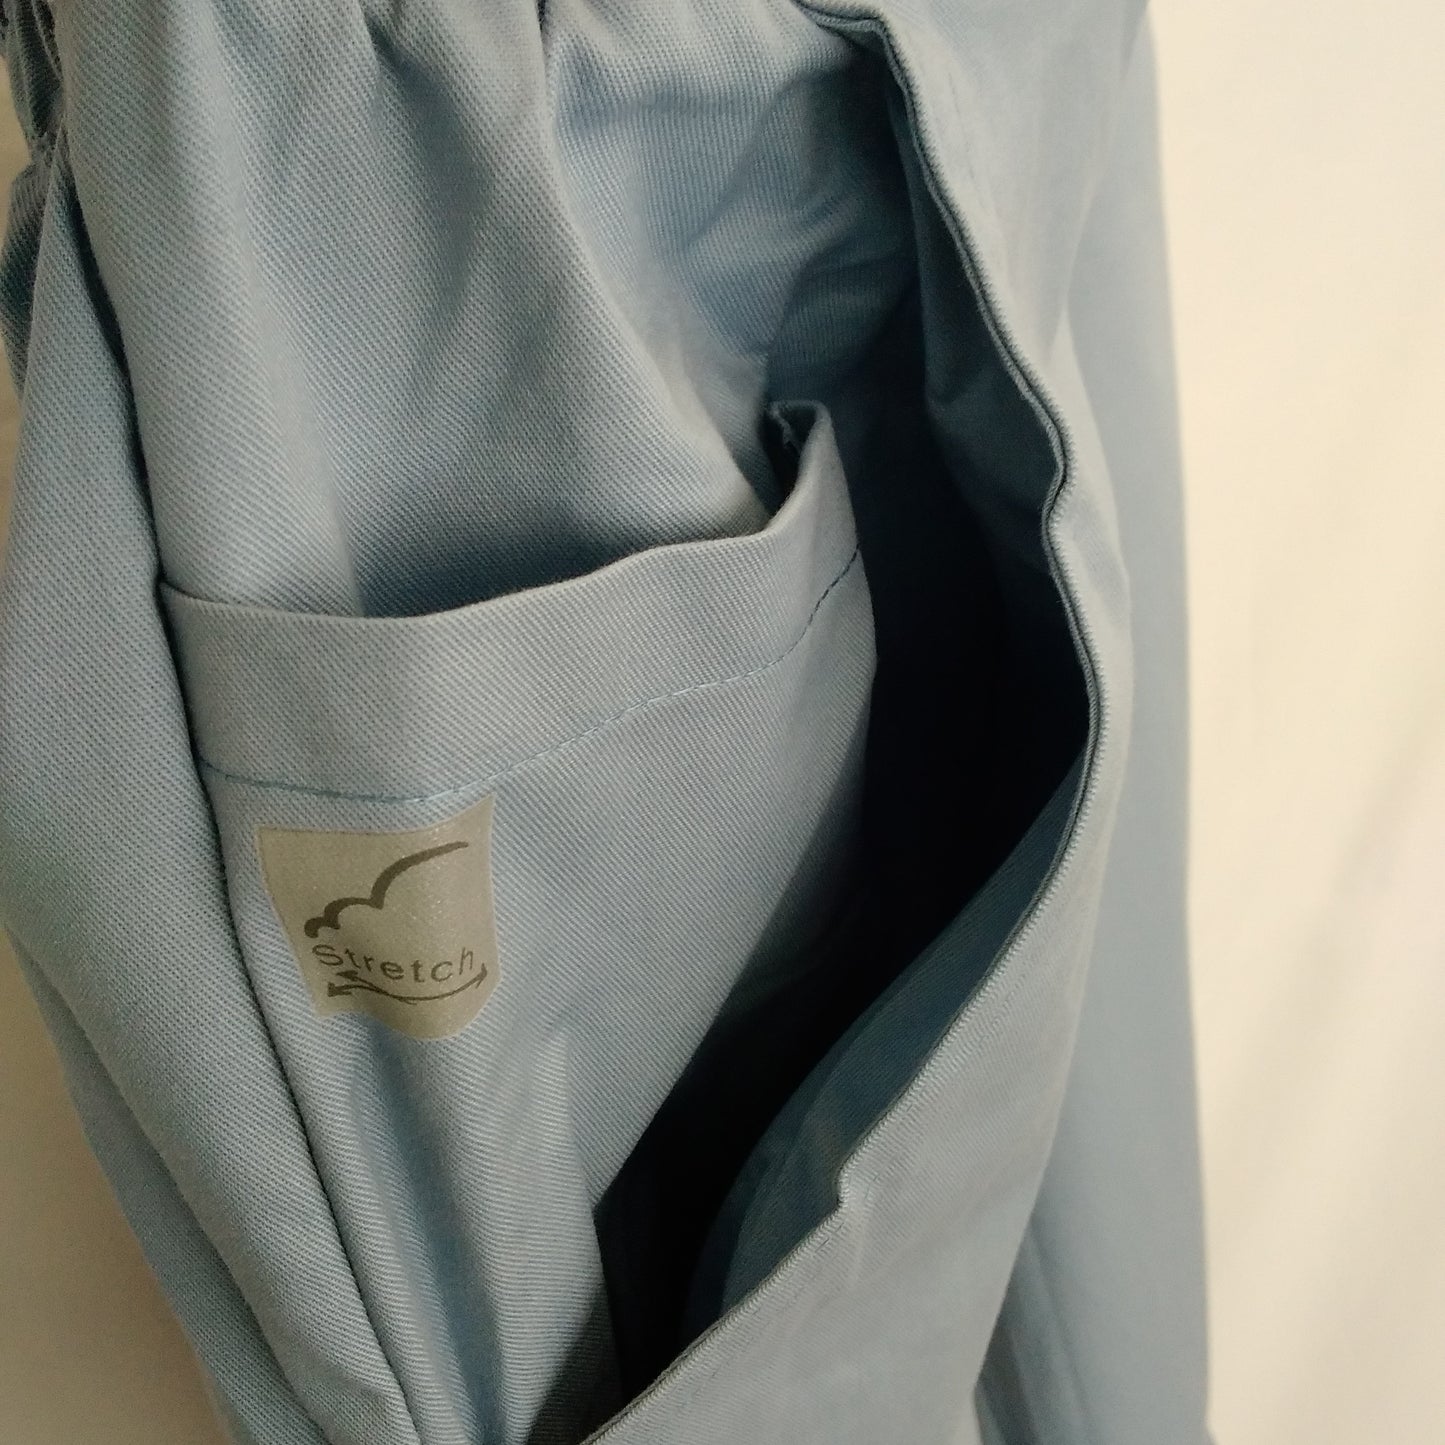 NWT - Uniform Advantage blue Butter-Soft Scrub Pants - M